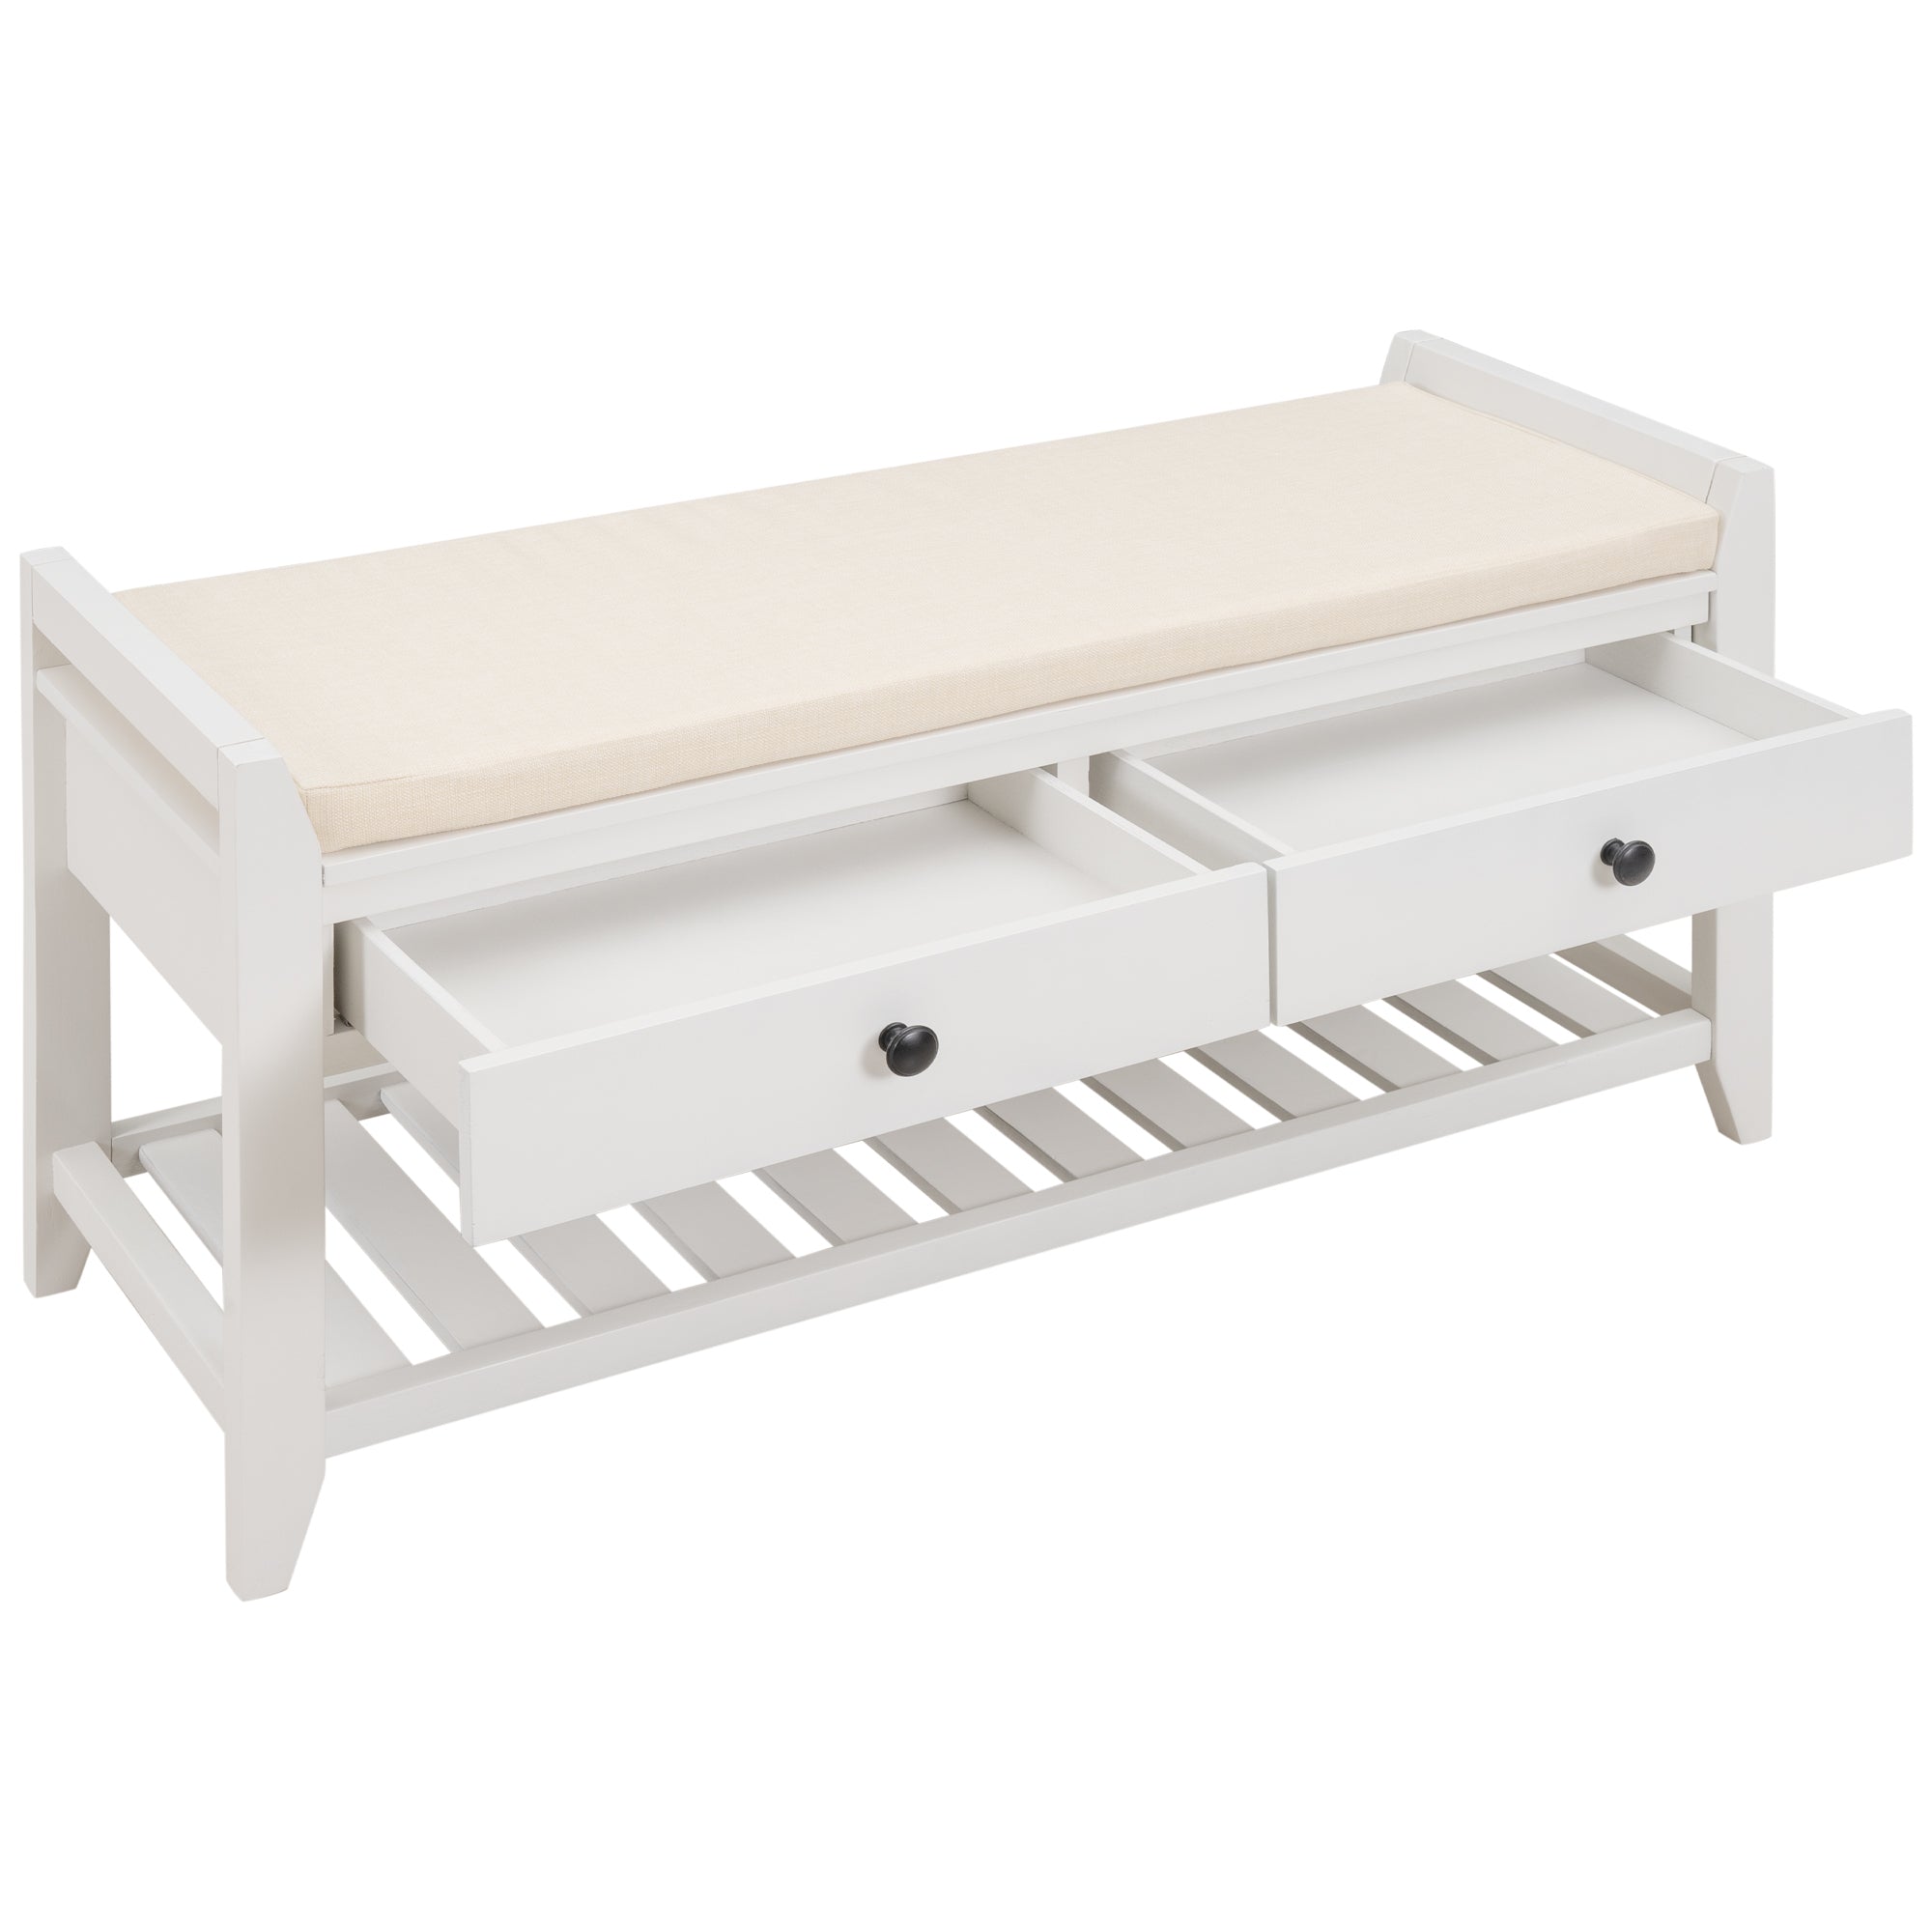 39" White Storage Seating Bench with Undershelf